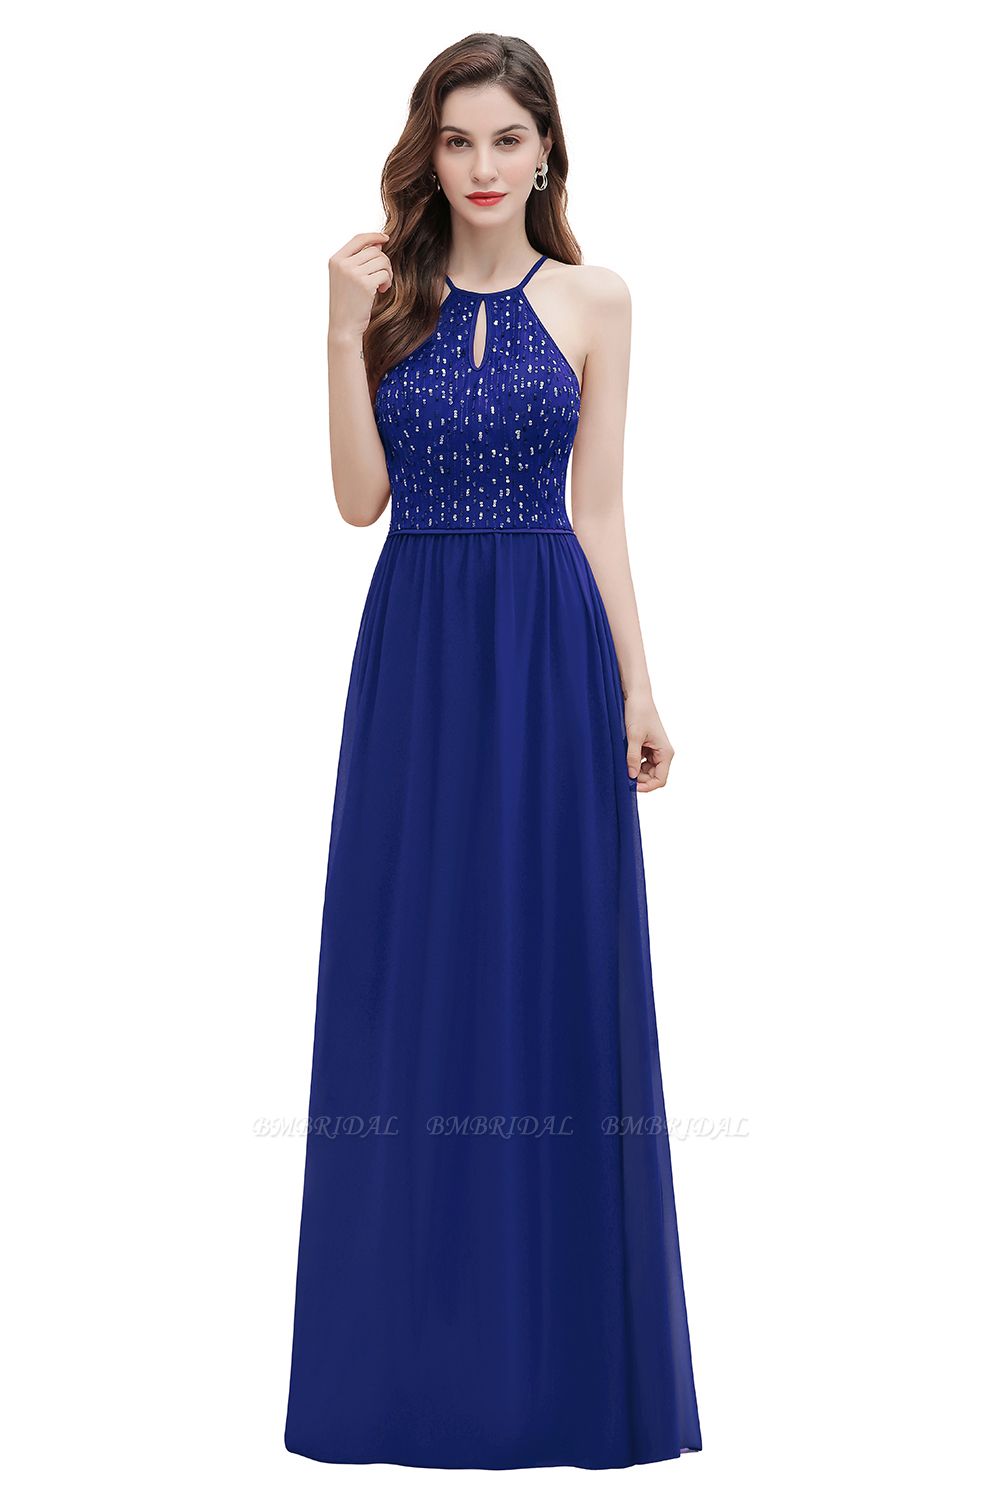 BMbridal Glamorous Halter A-line Bridesmaid Dress Chiffon Sequins Elegant Party Maxi Dress